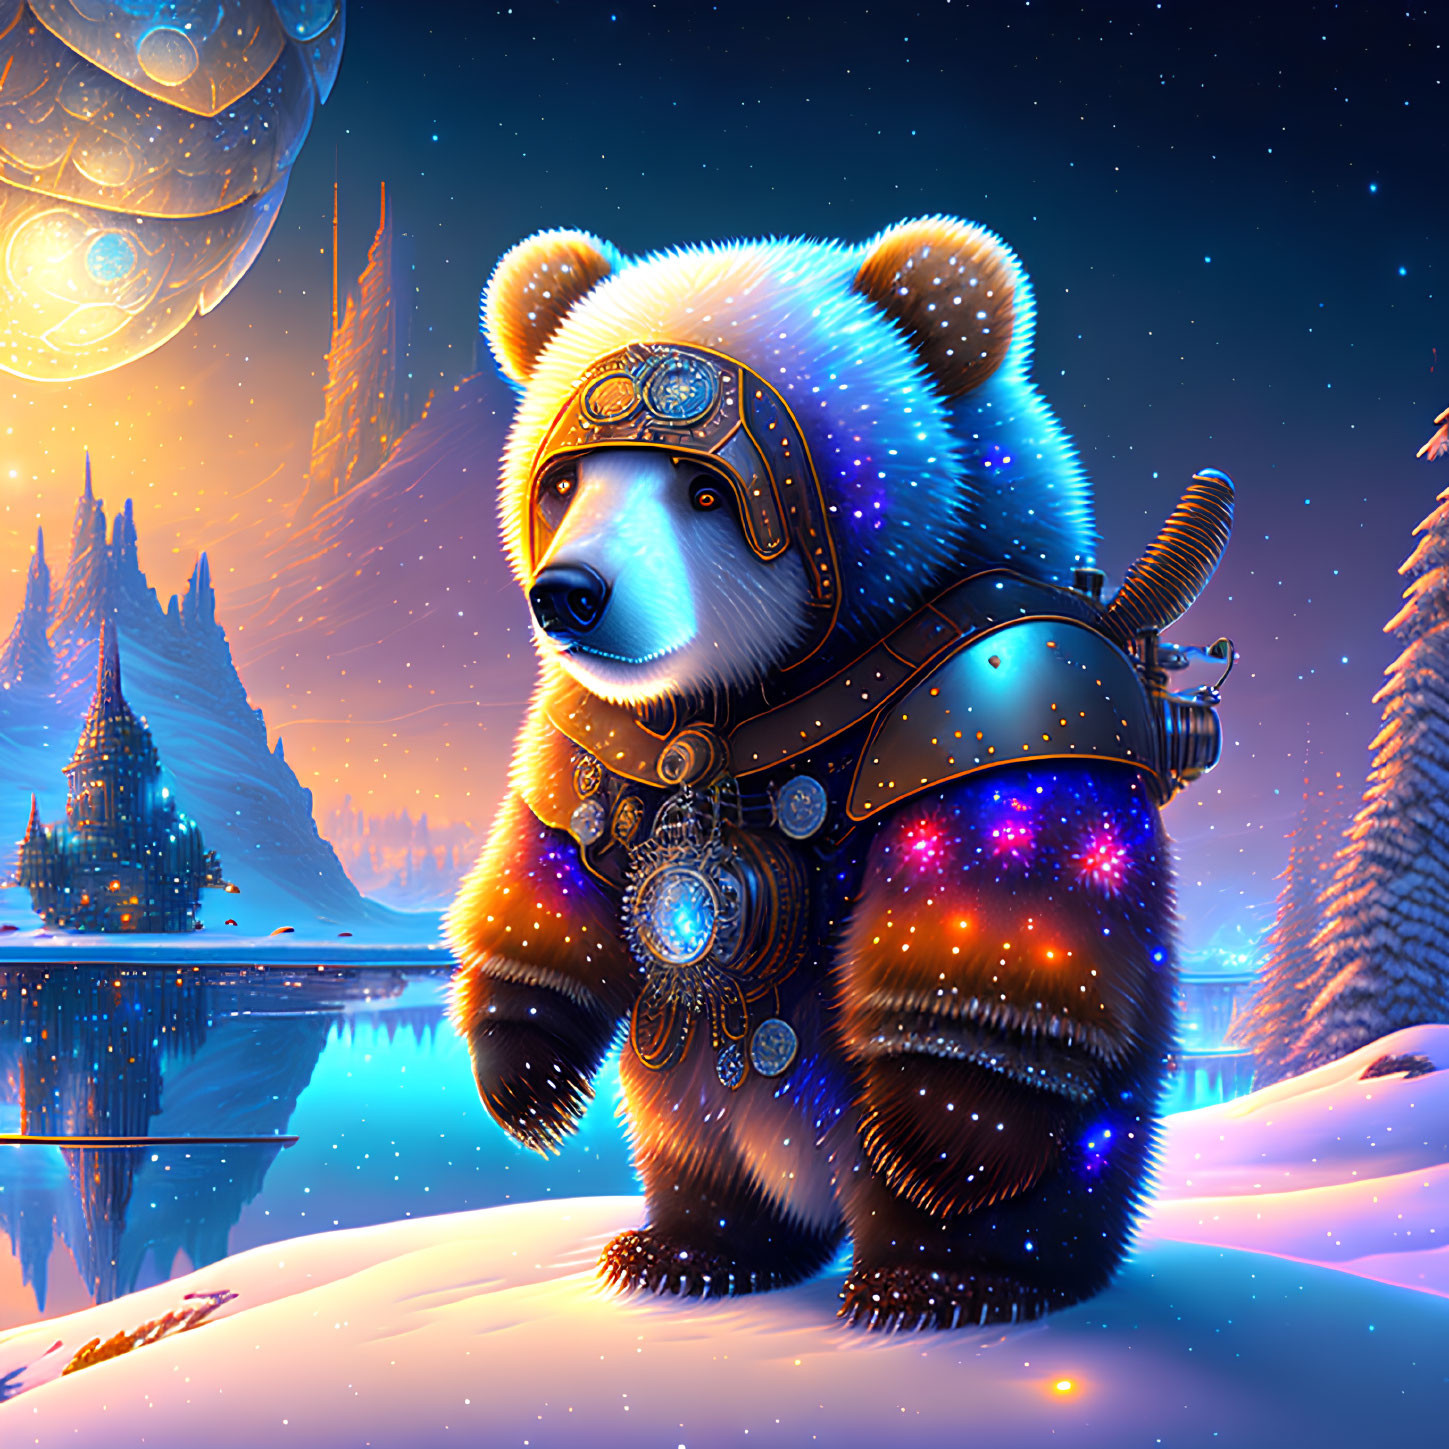 Colorful Armored Panda in Snowy Fantasy Scene